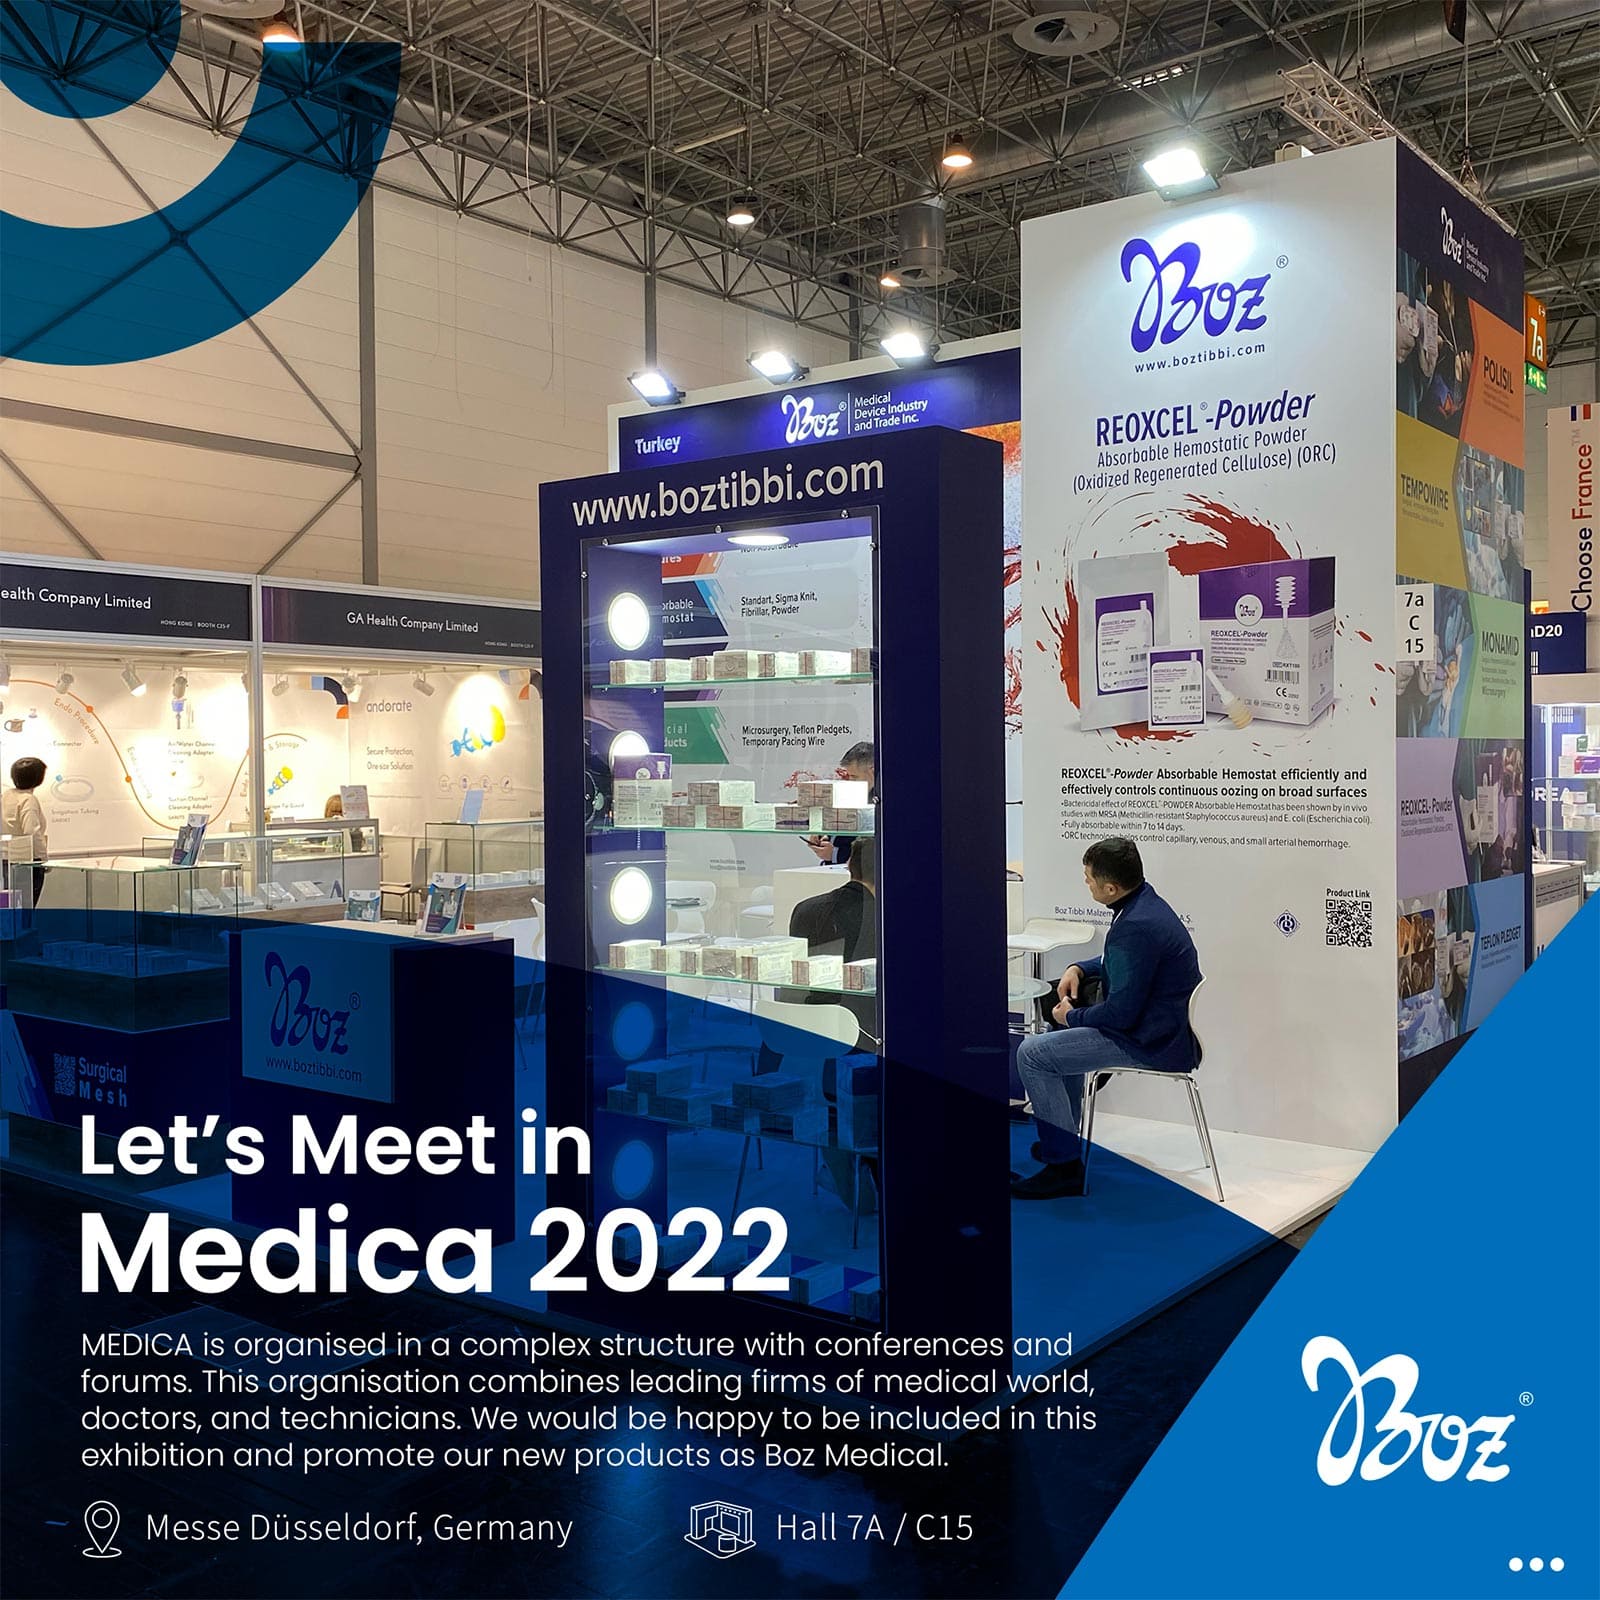 Let's Meet in Medica 2022 - Boz Medical